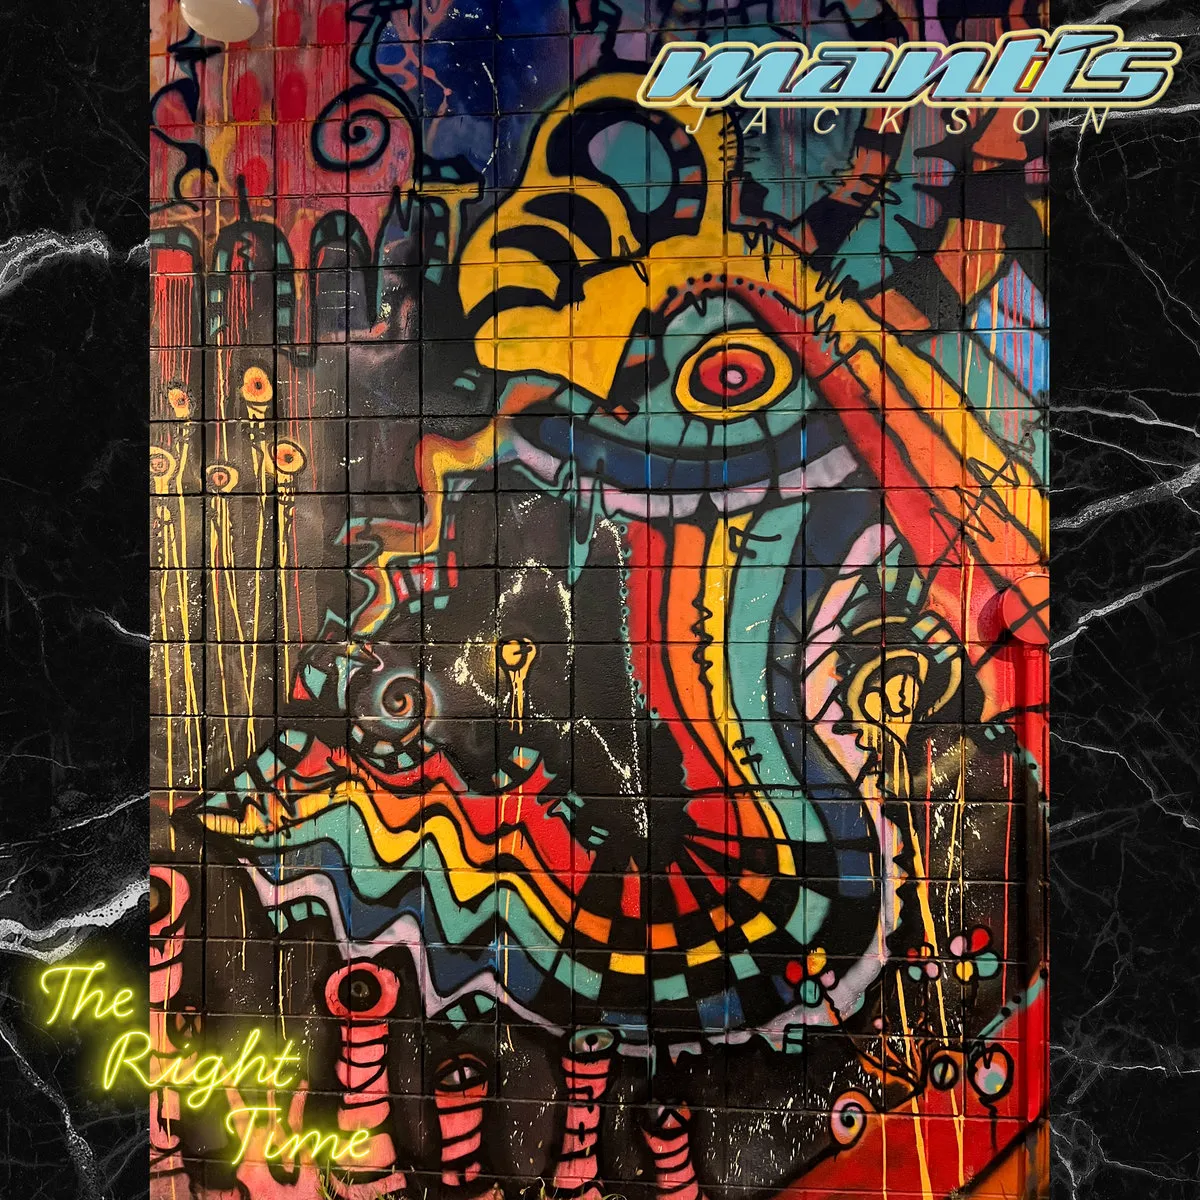 Album art courtesy of Mantis Jackson